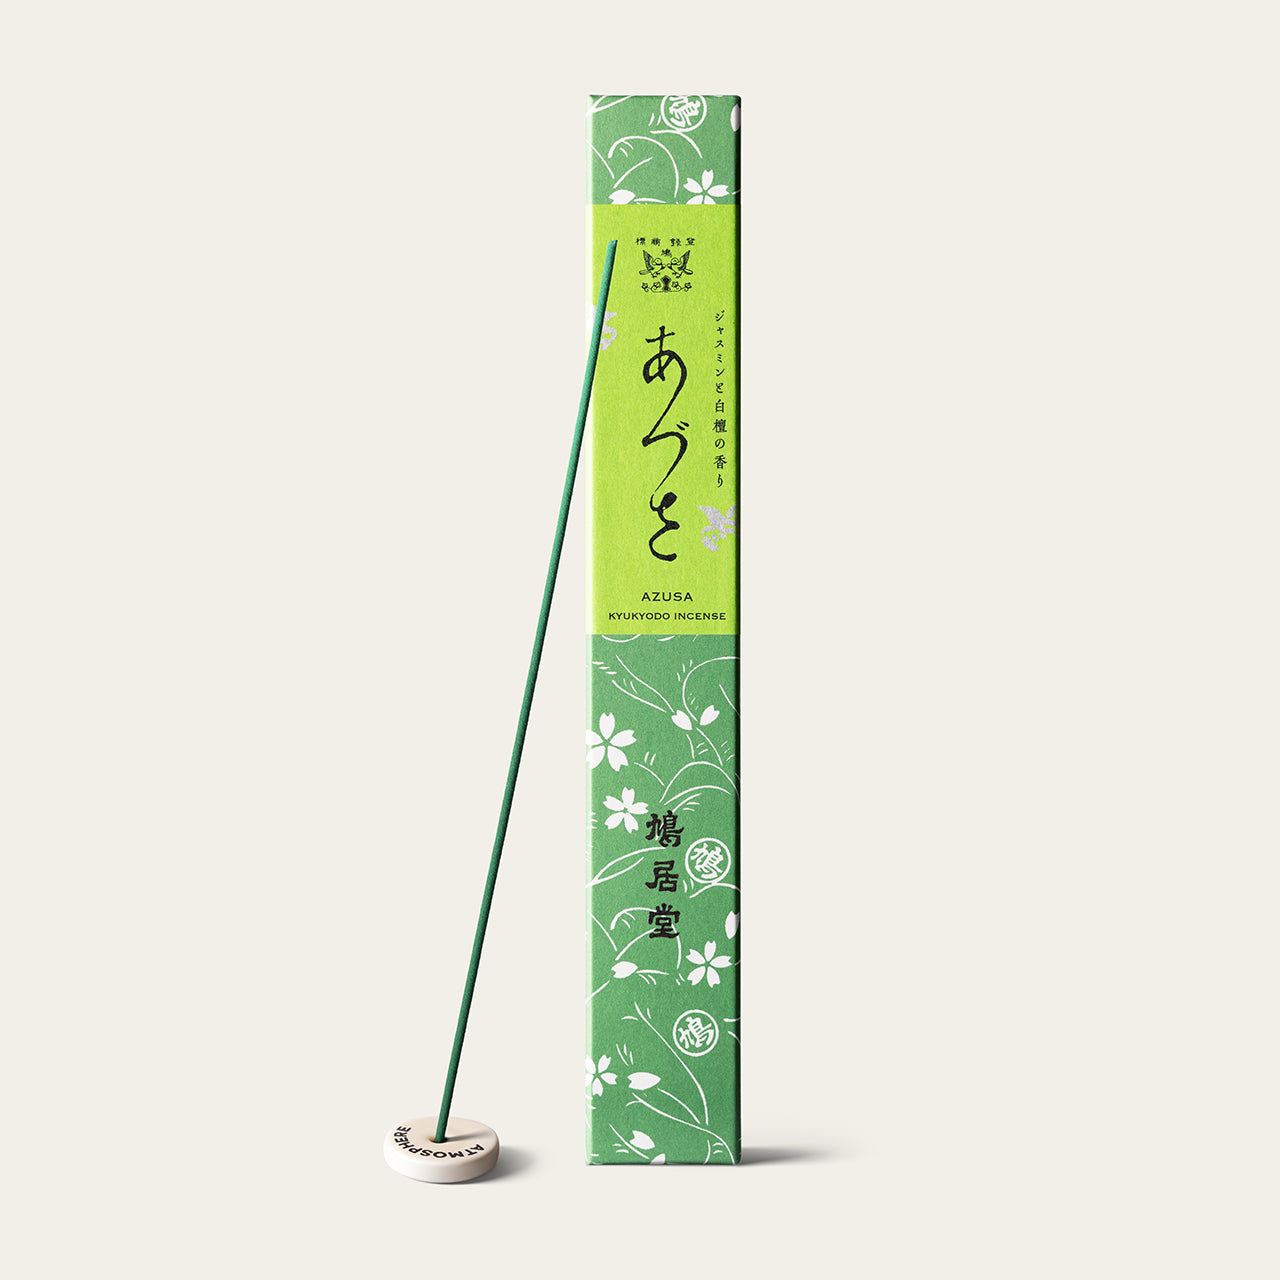 Kyukyodo Azusa 17cm Japanese incense sticks (60 sticks) with Atmosphere ceramic incense holder